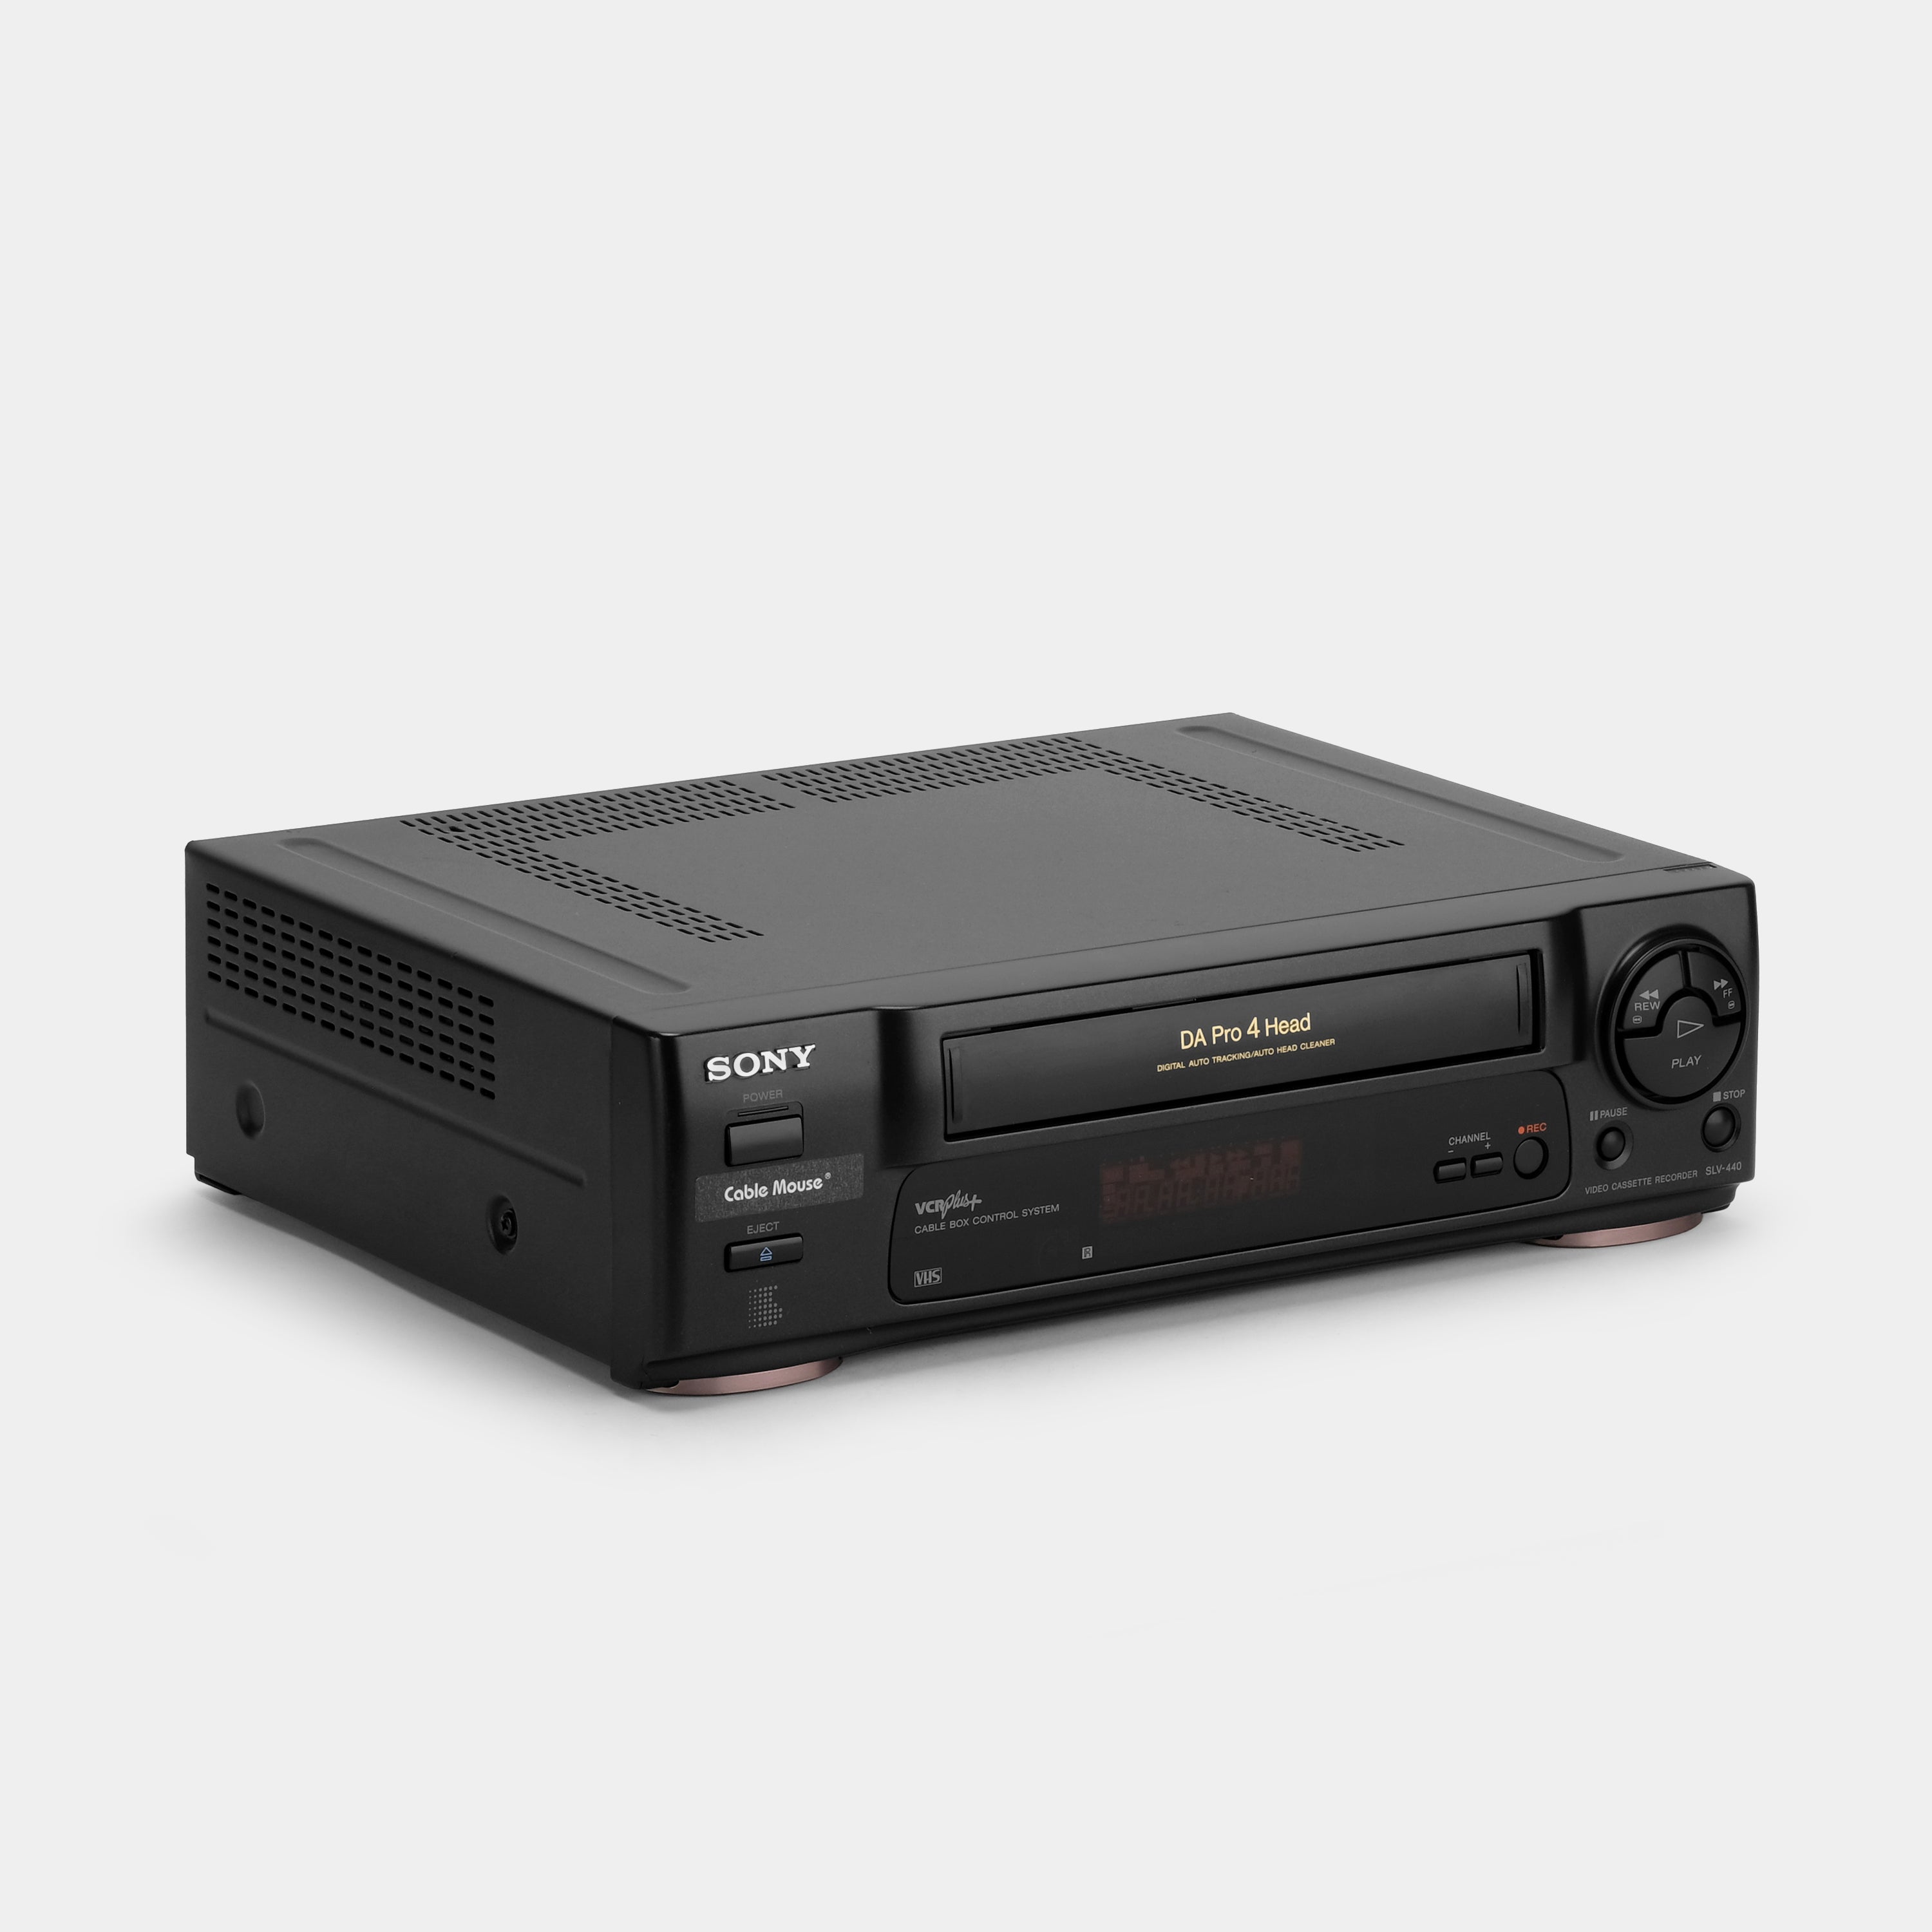 Sony SLV-440 VCR VHS Player